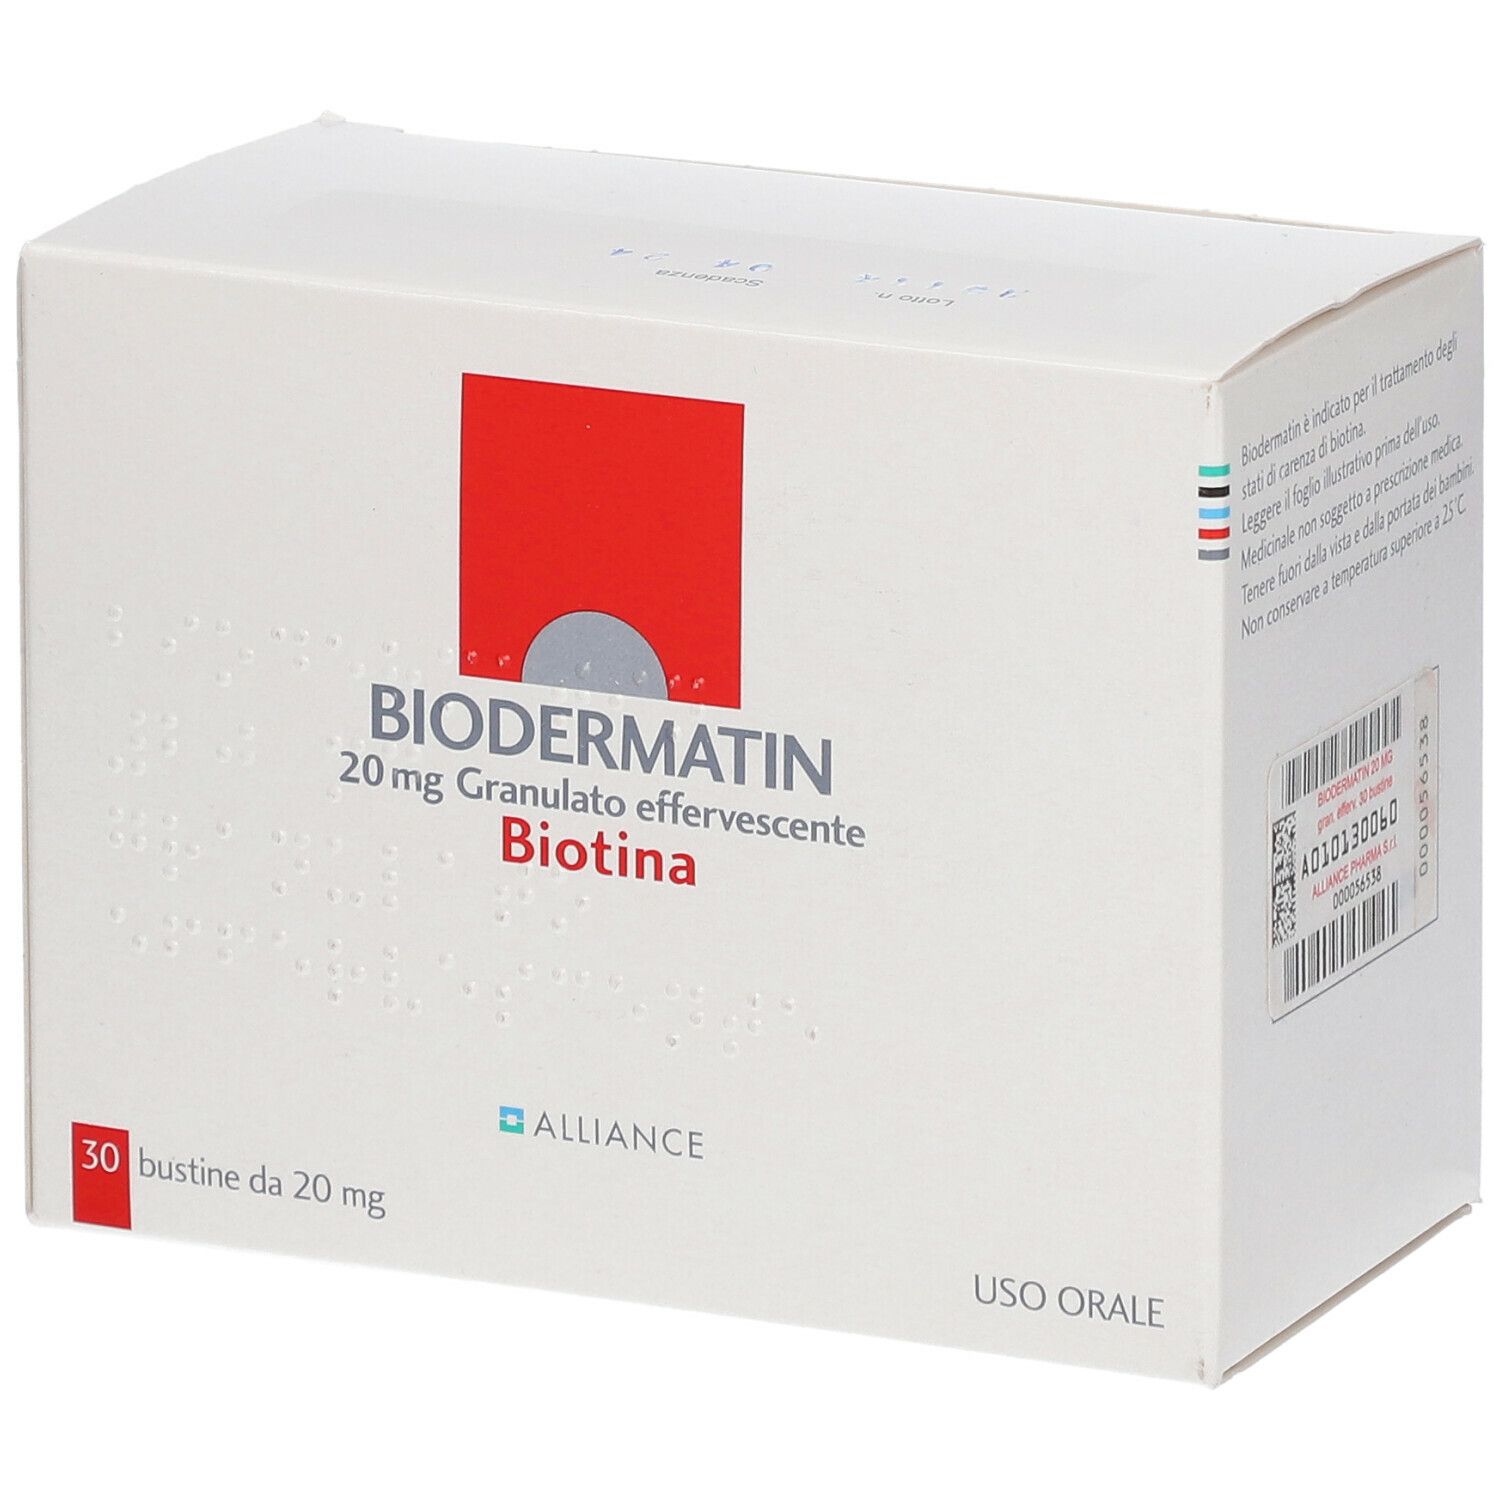 Image of BIODERMATIN 20 mg Granulato effervescente 30 Bustine